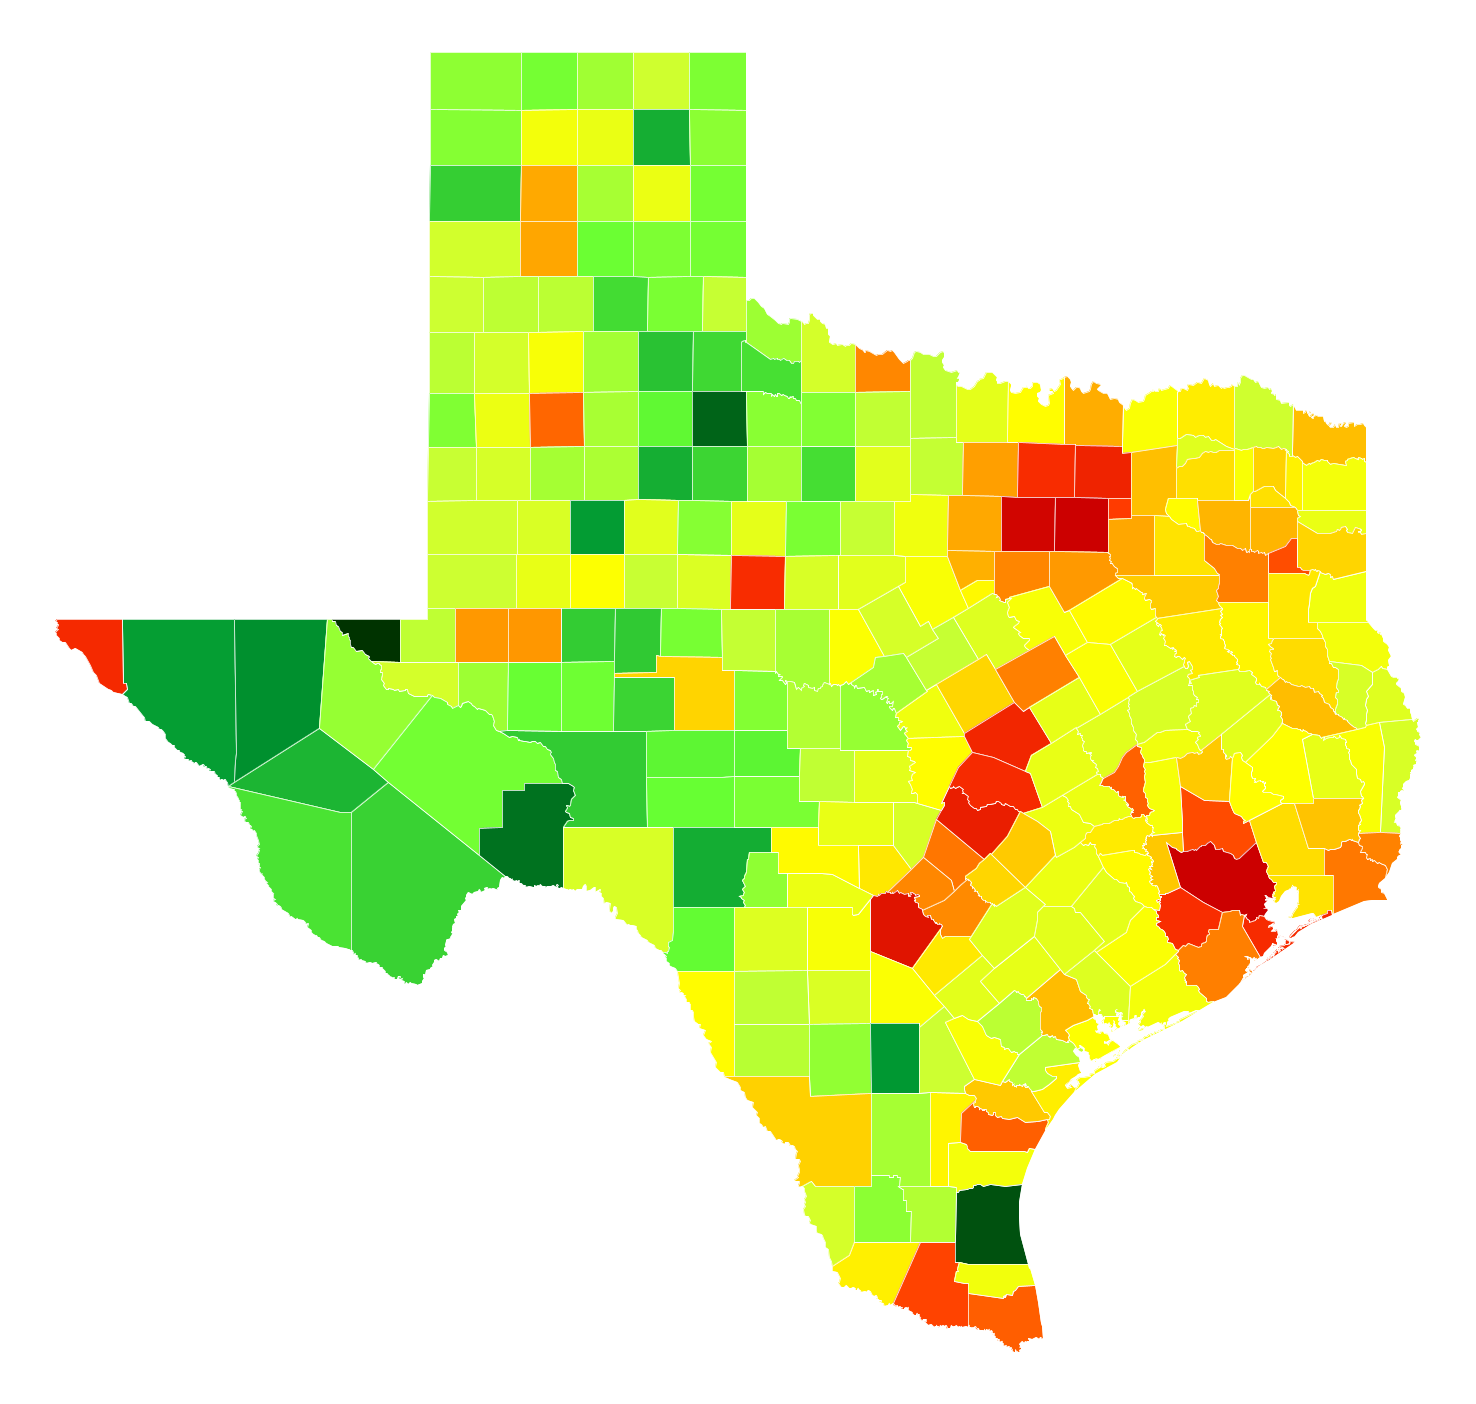 Texas Population Density